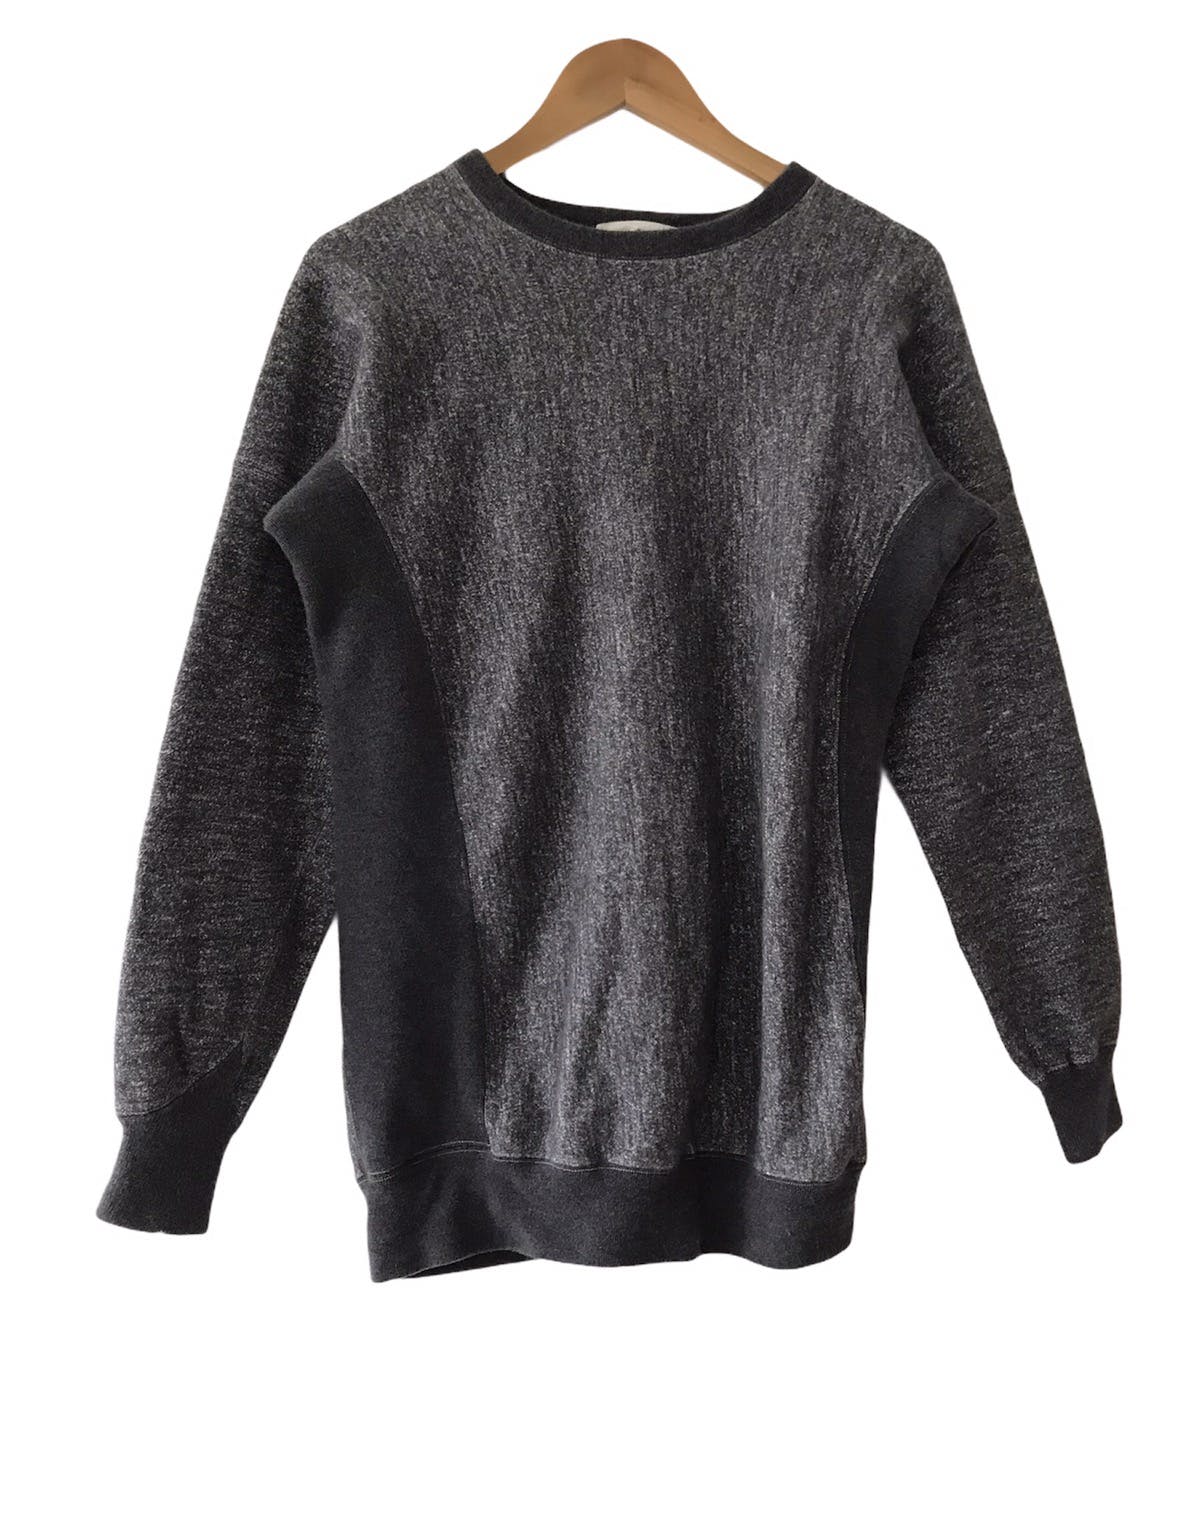 1998 General Reseach wool sweater - 2